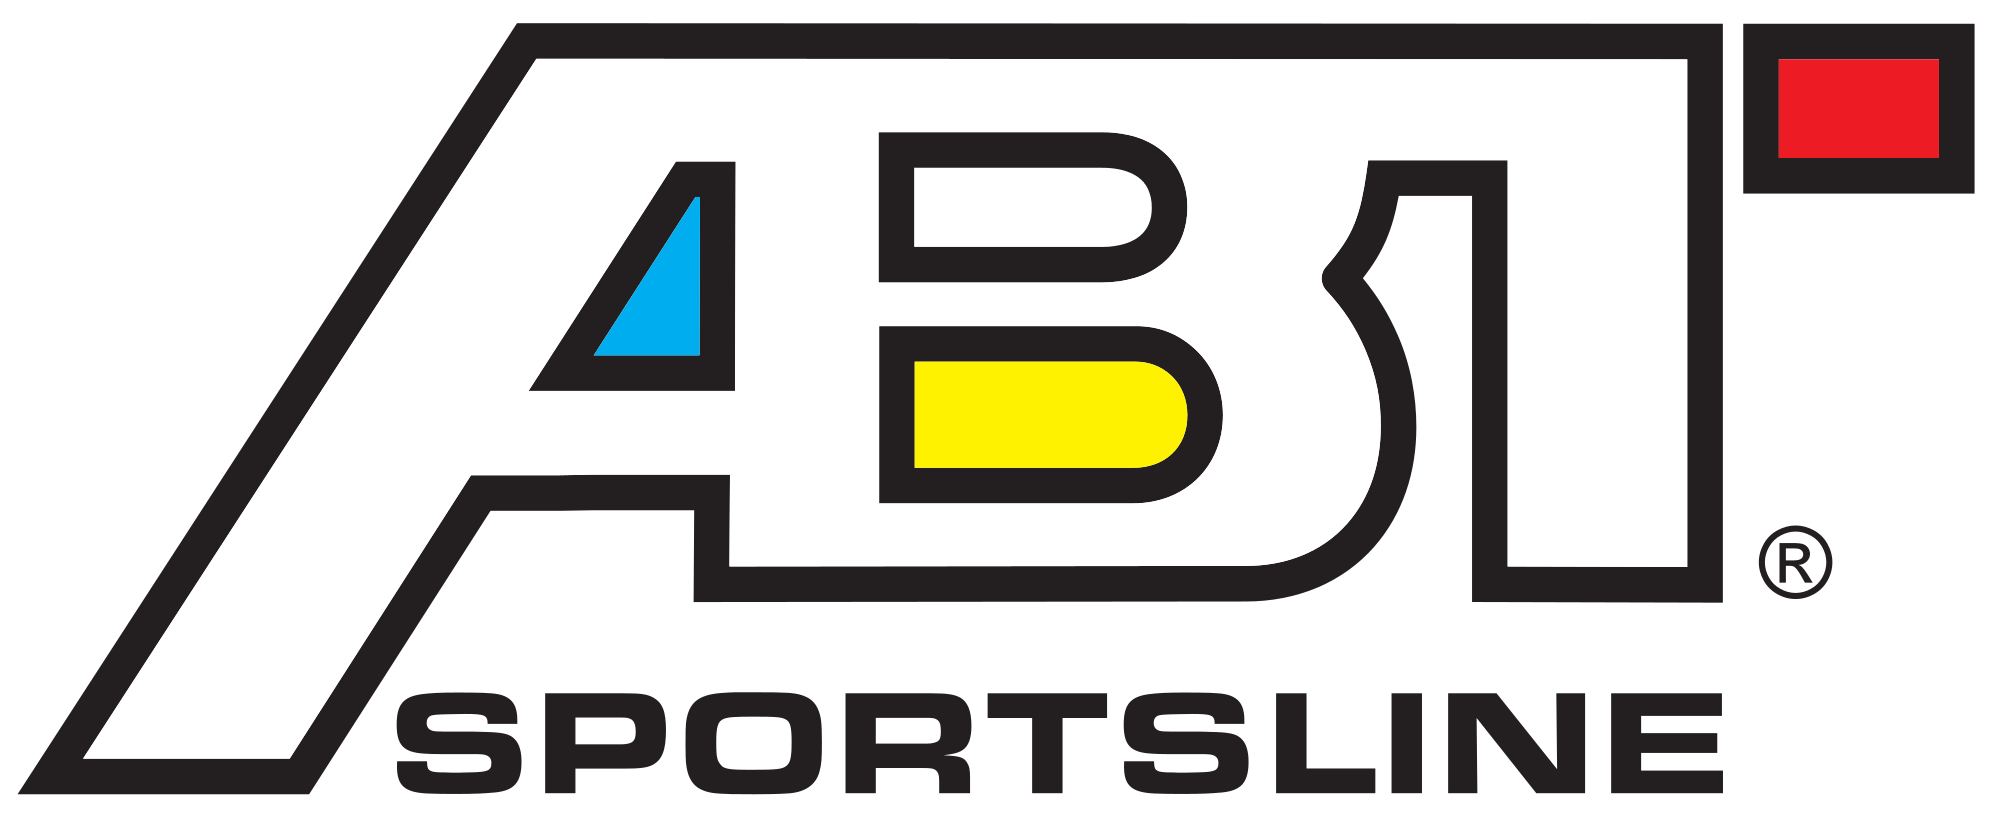 Abt Logo - File:Abt-logo.svg - Wikimedia Commons